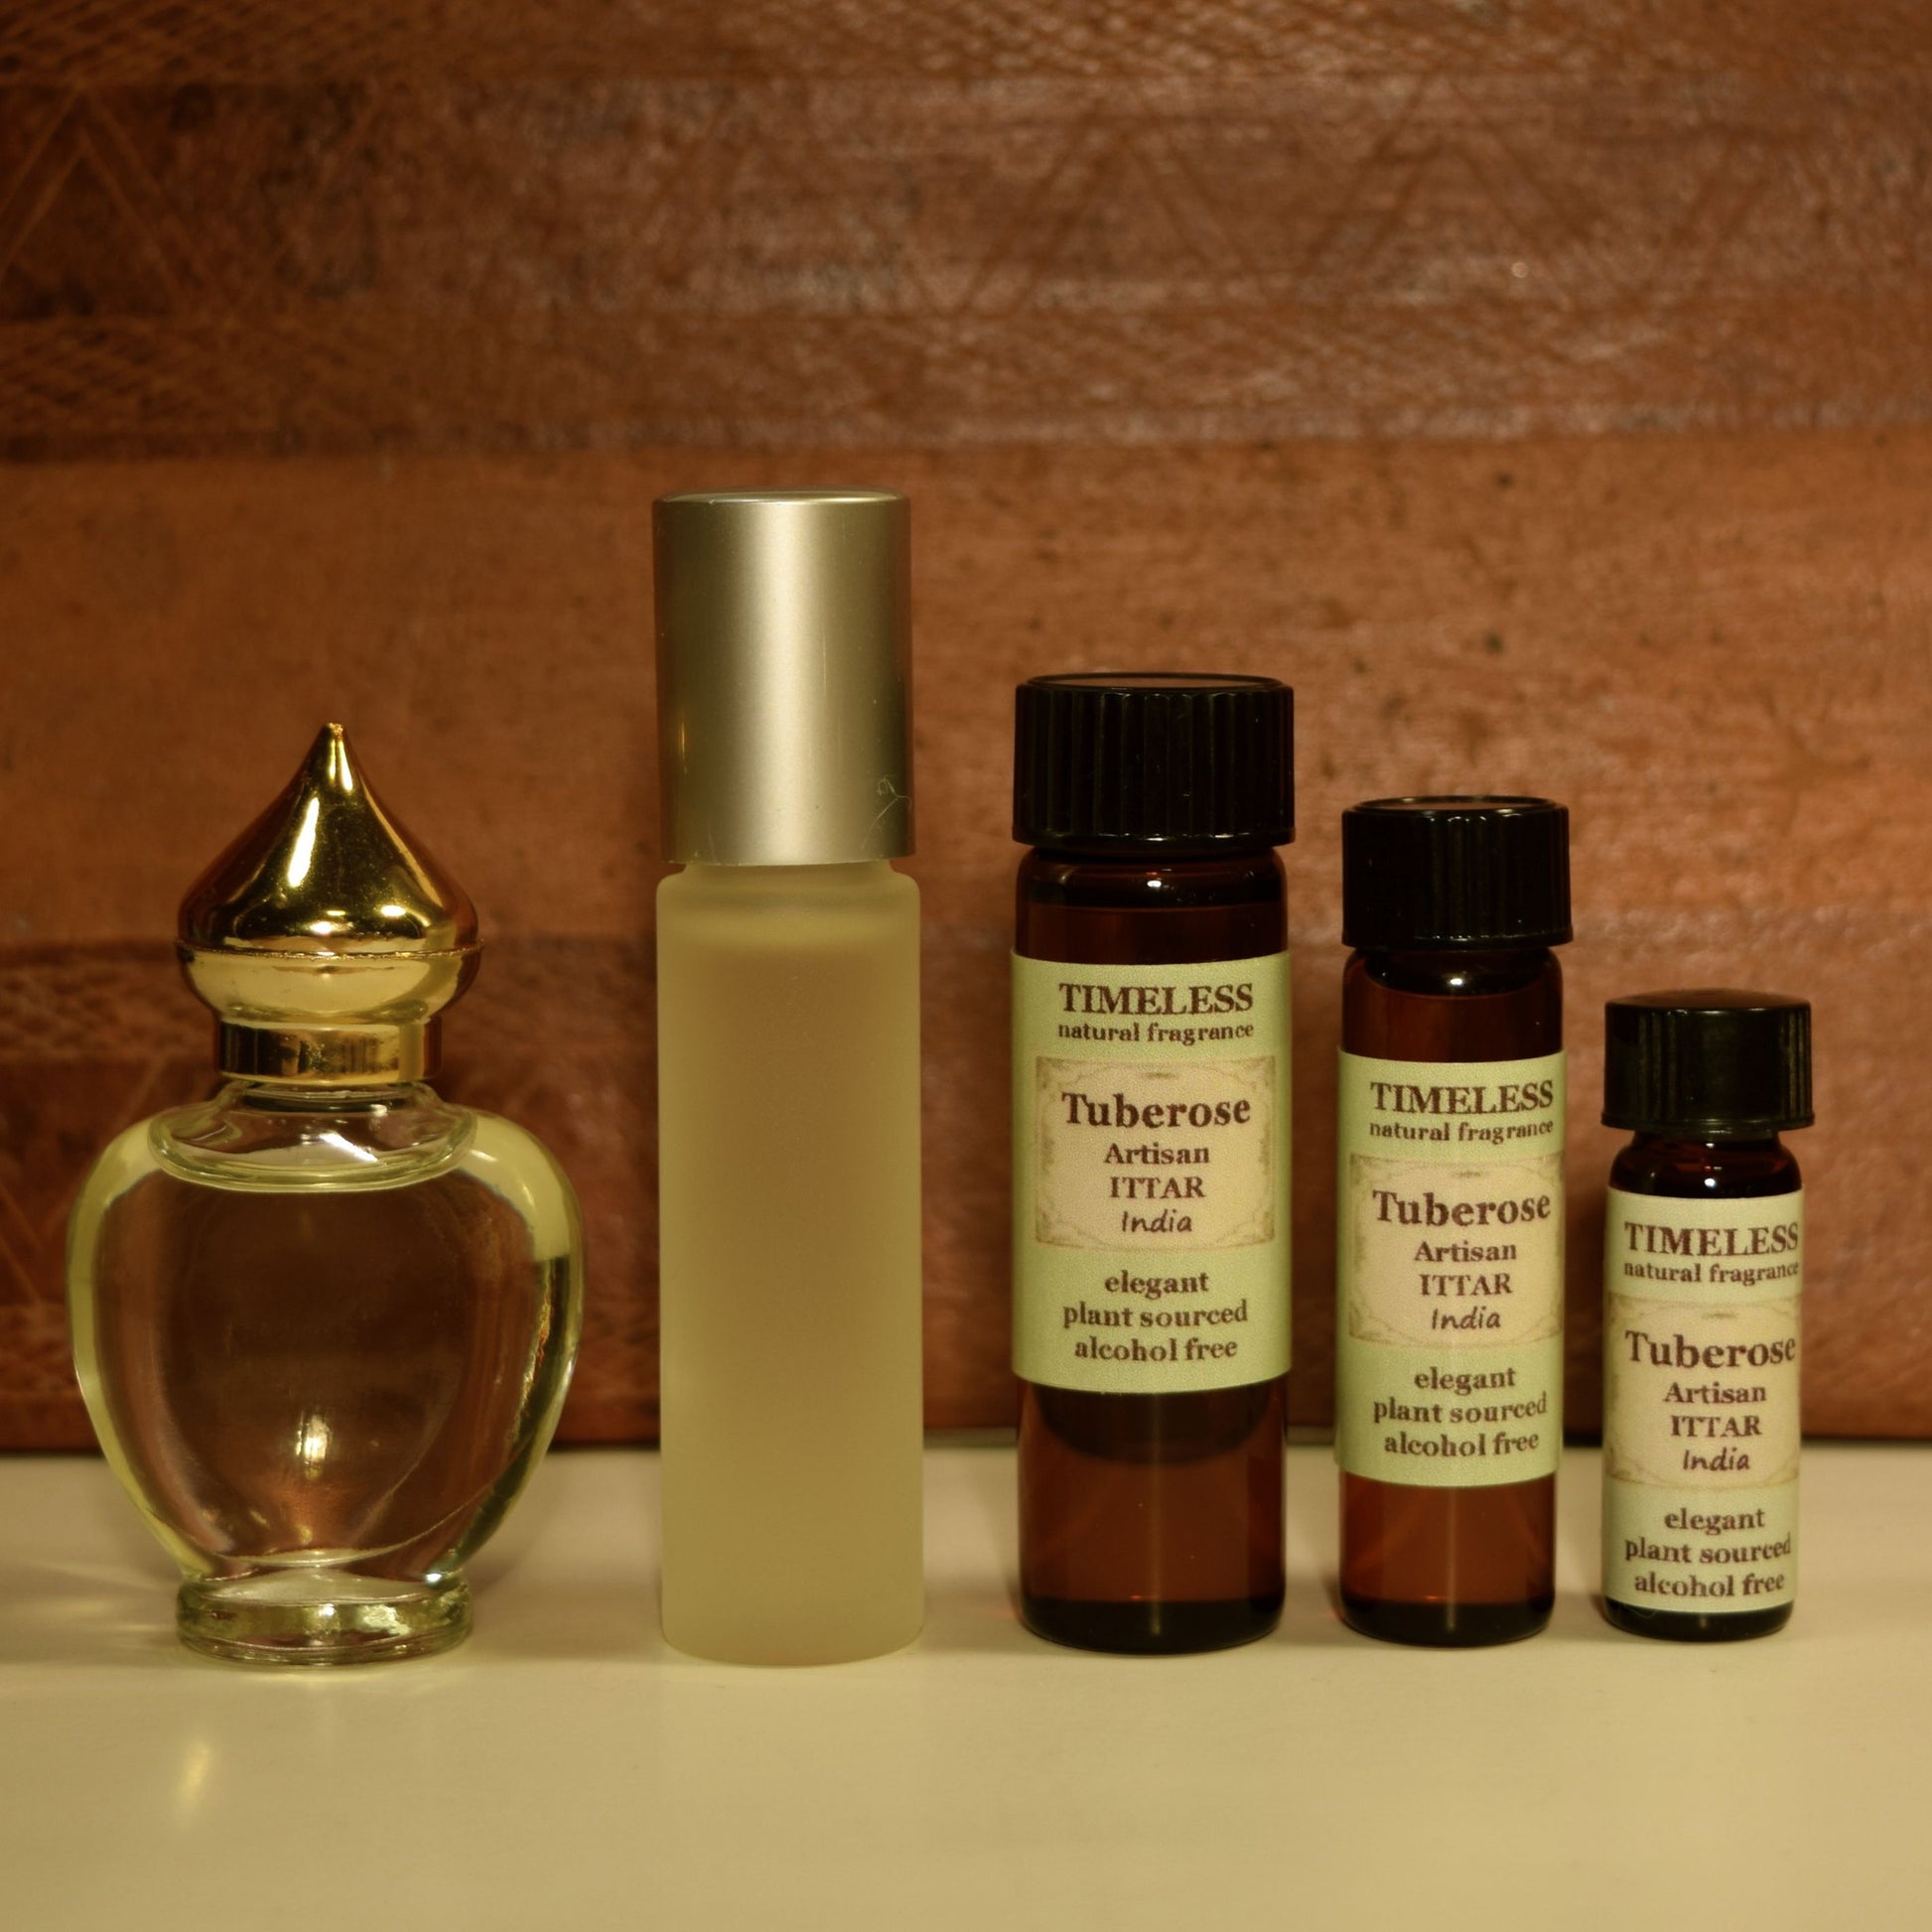 TIMELESS Tuberose Attar is an elegant natural perfume oil – TIMELESS Essential  Oils